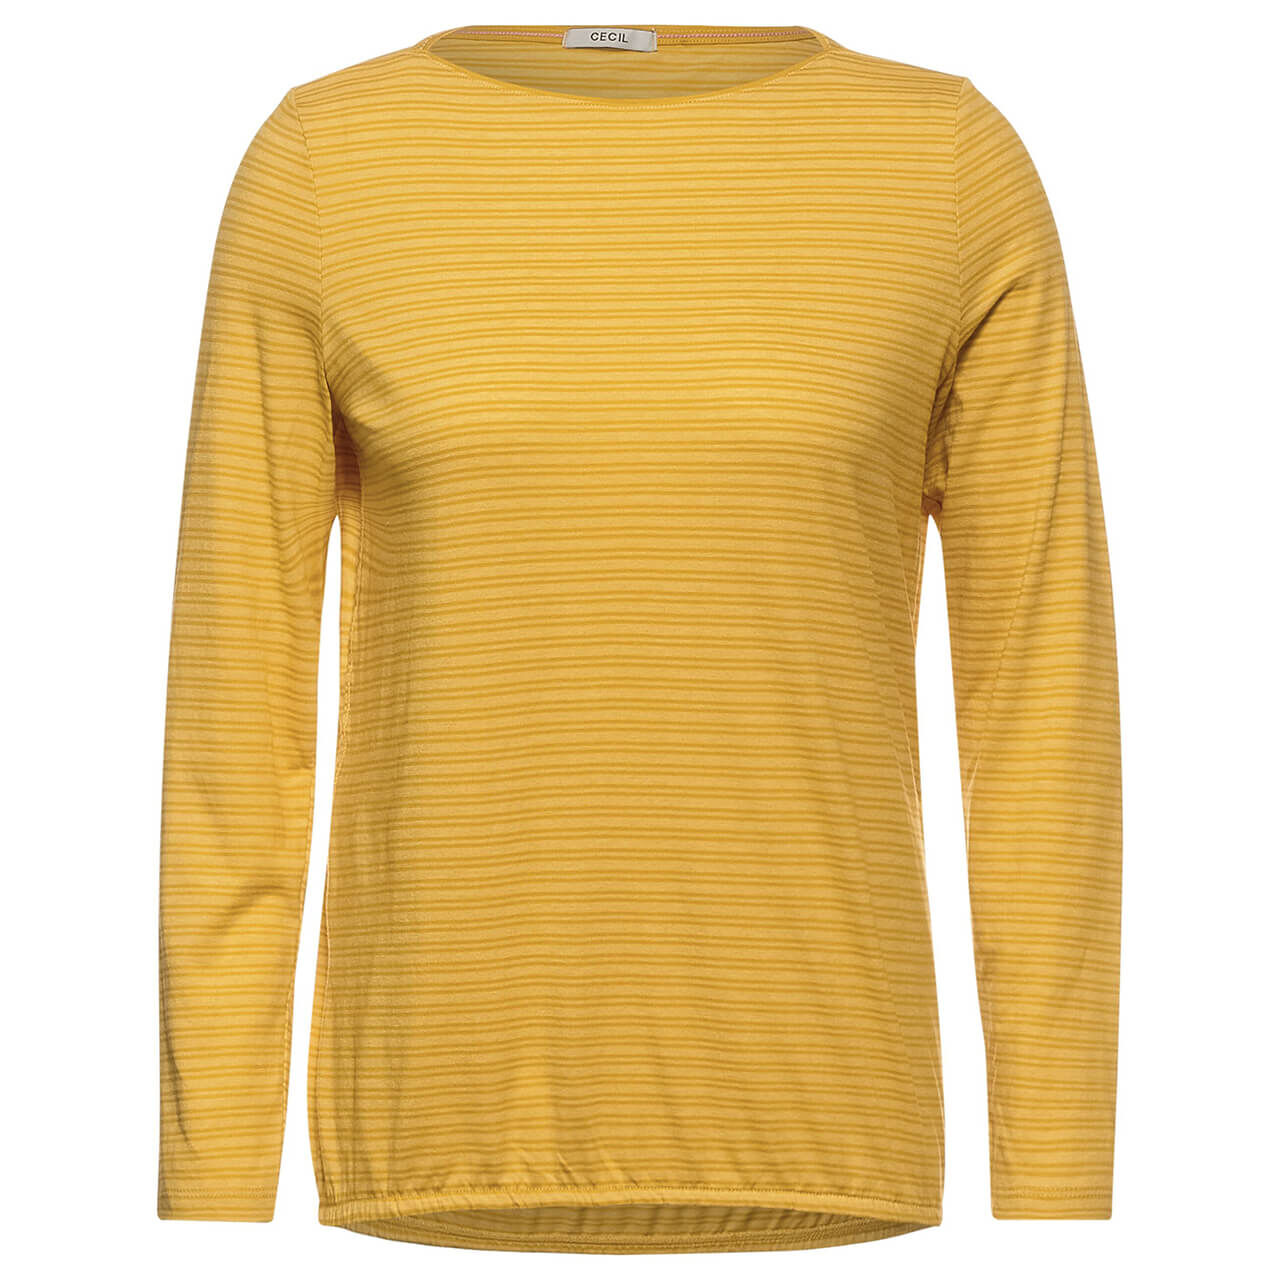 Cecil Overdye Double Stripe Langarm Shirt curry yellow stripes